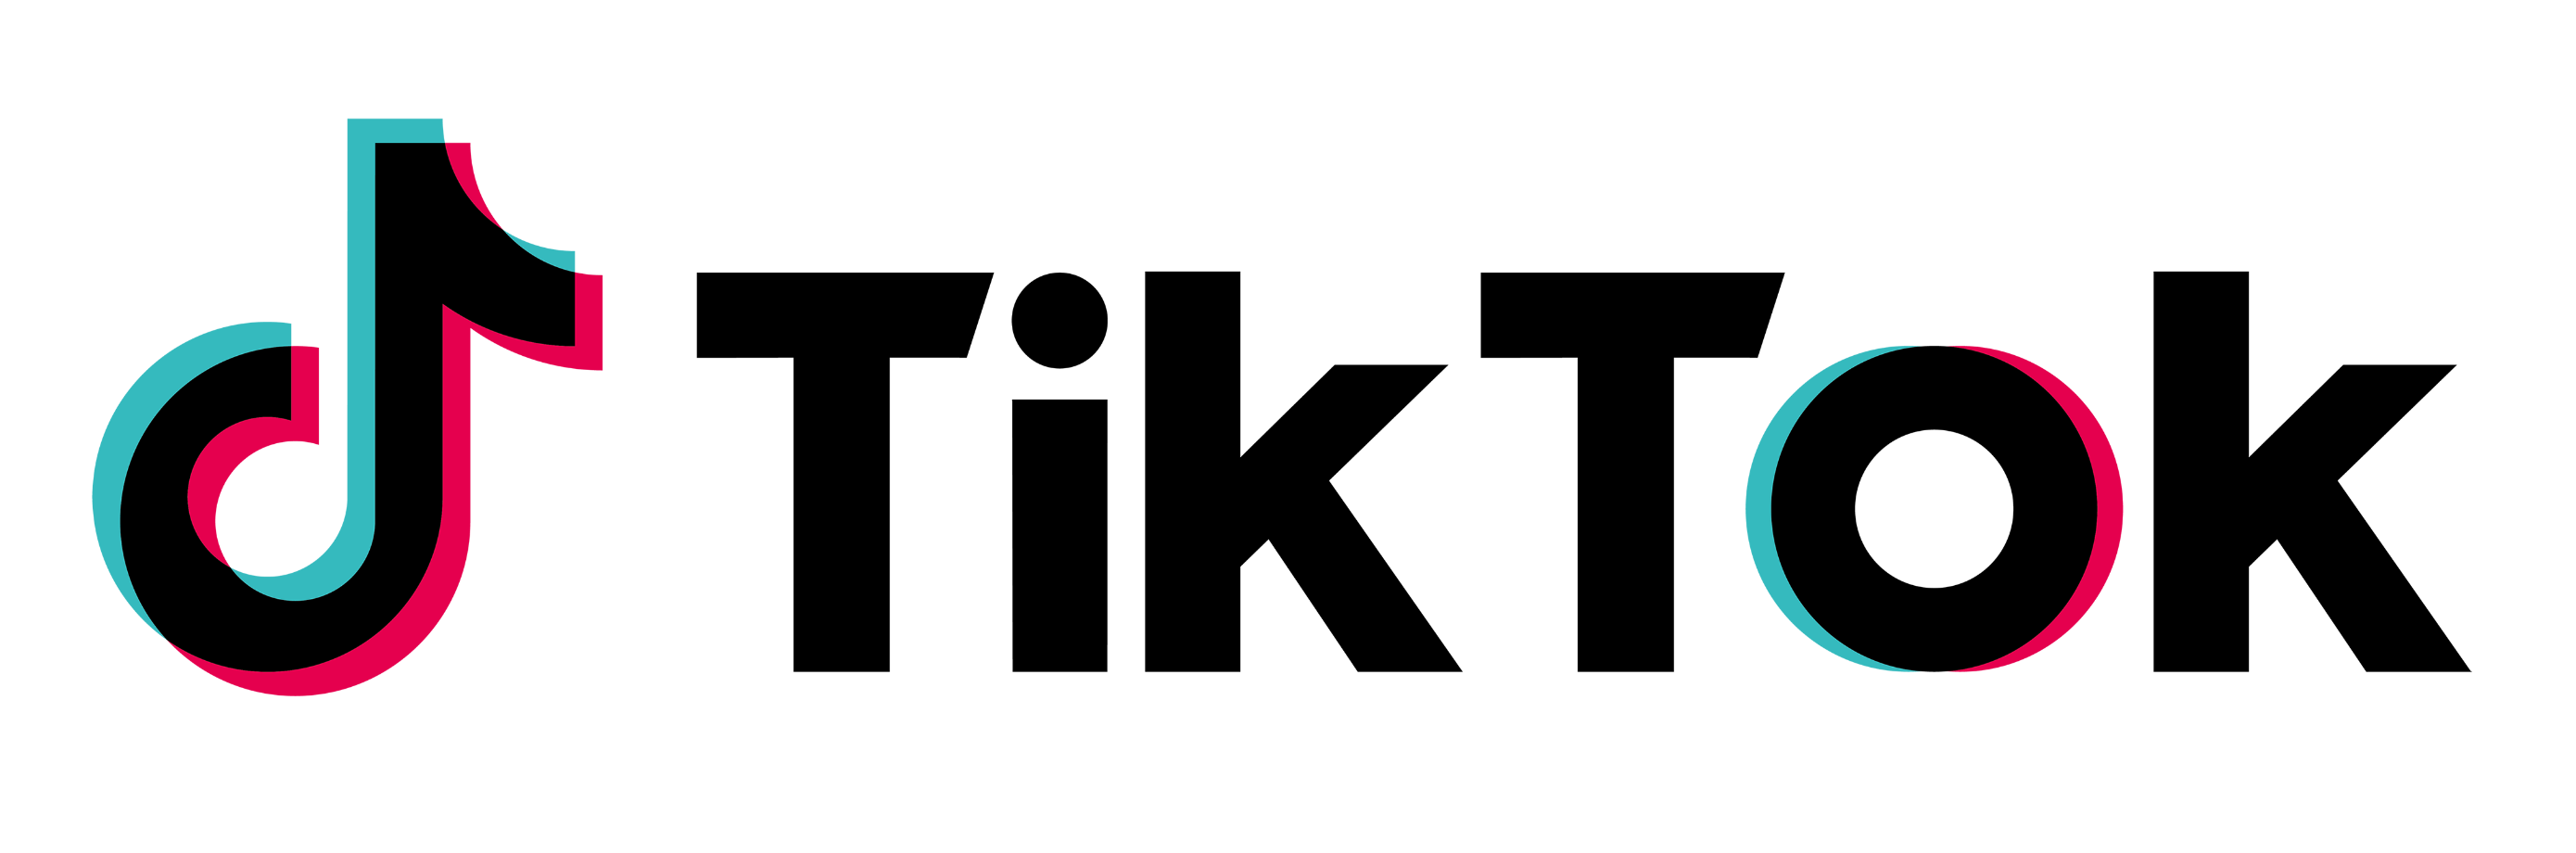 Tiktok logo horizontal